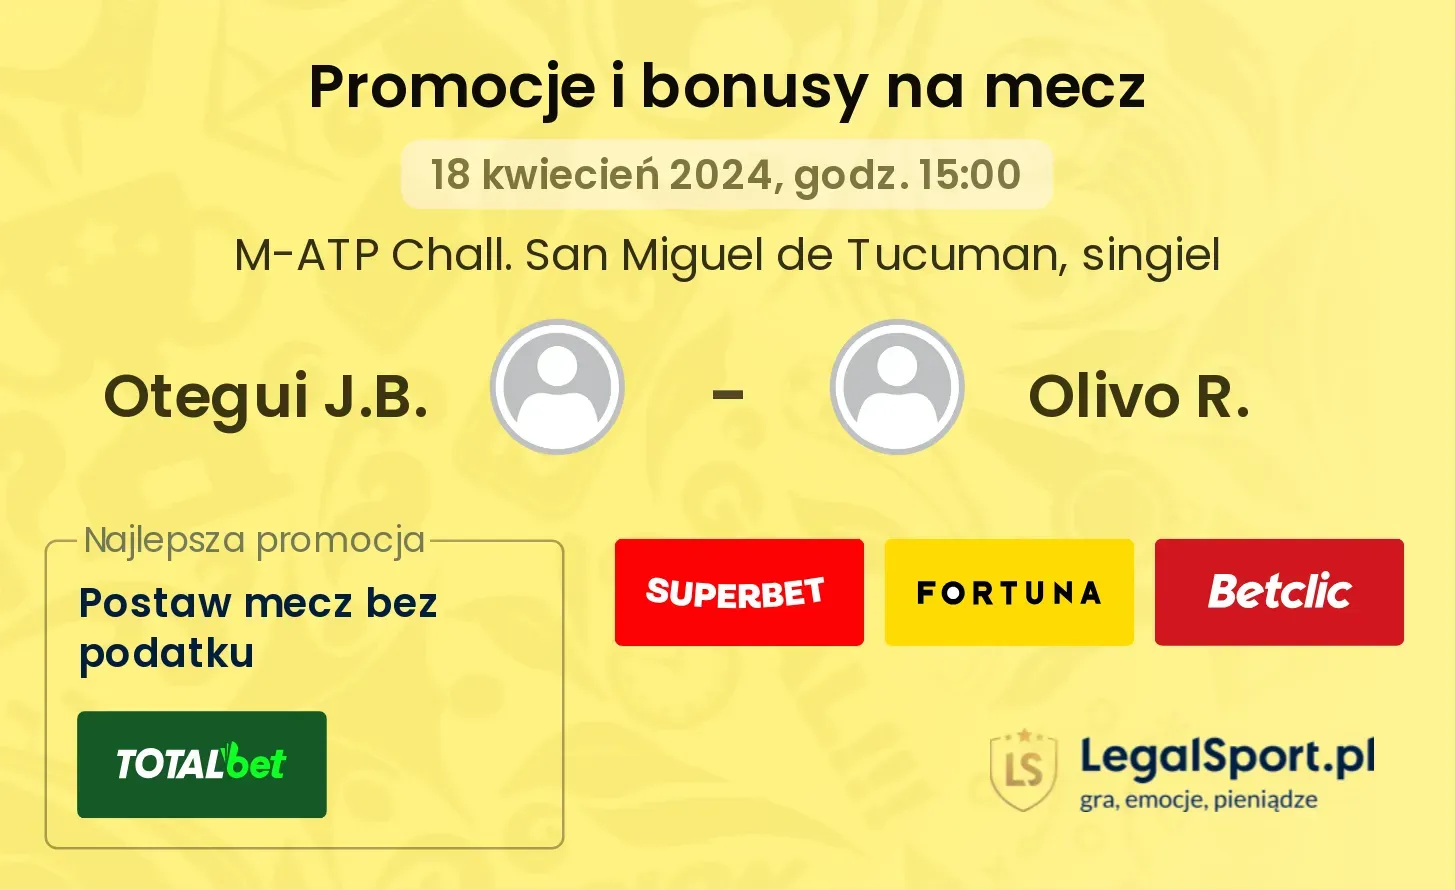 Otegui J.B. - Olivo R. promocje bonusy na mecz